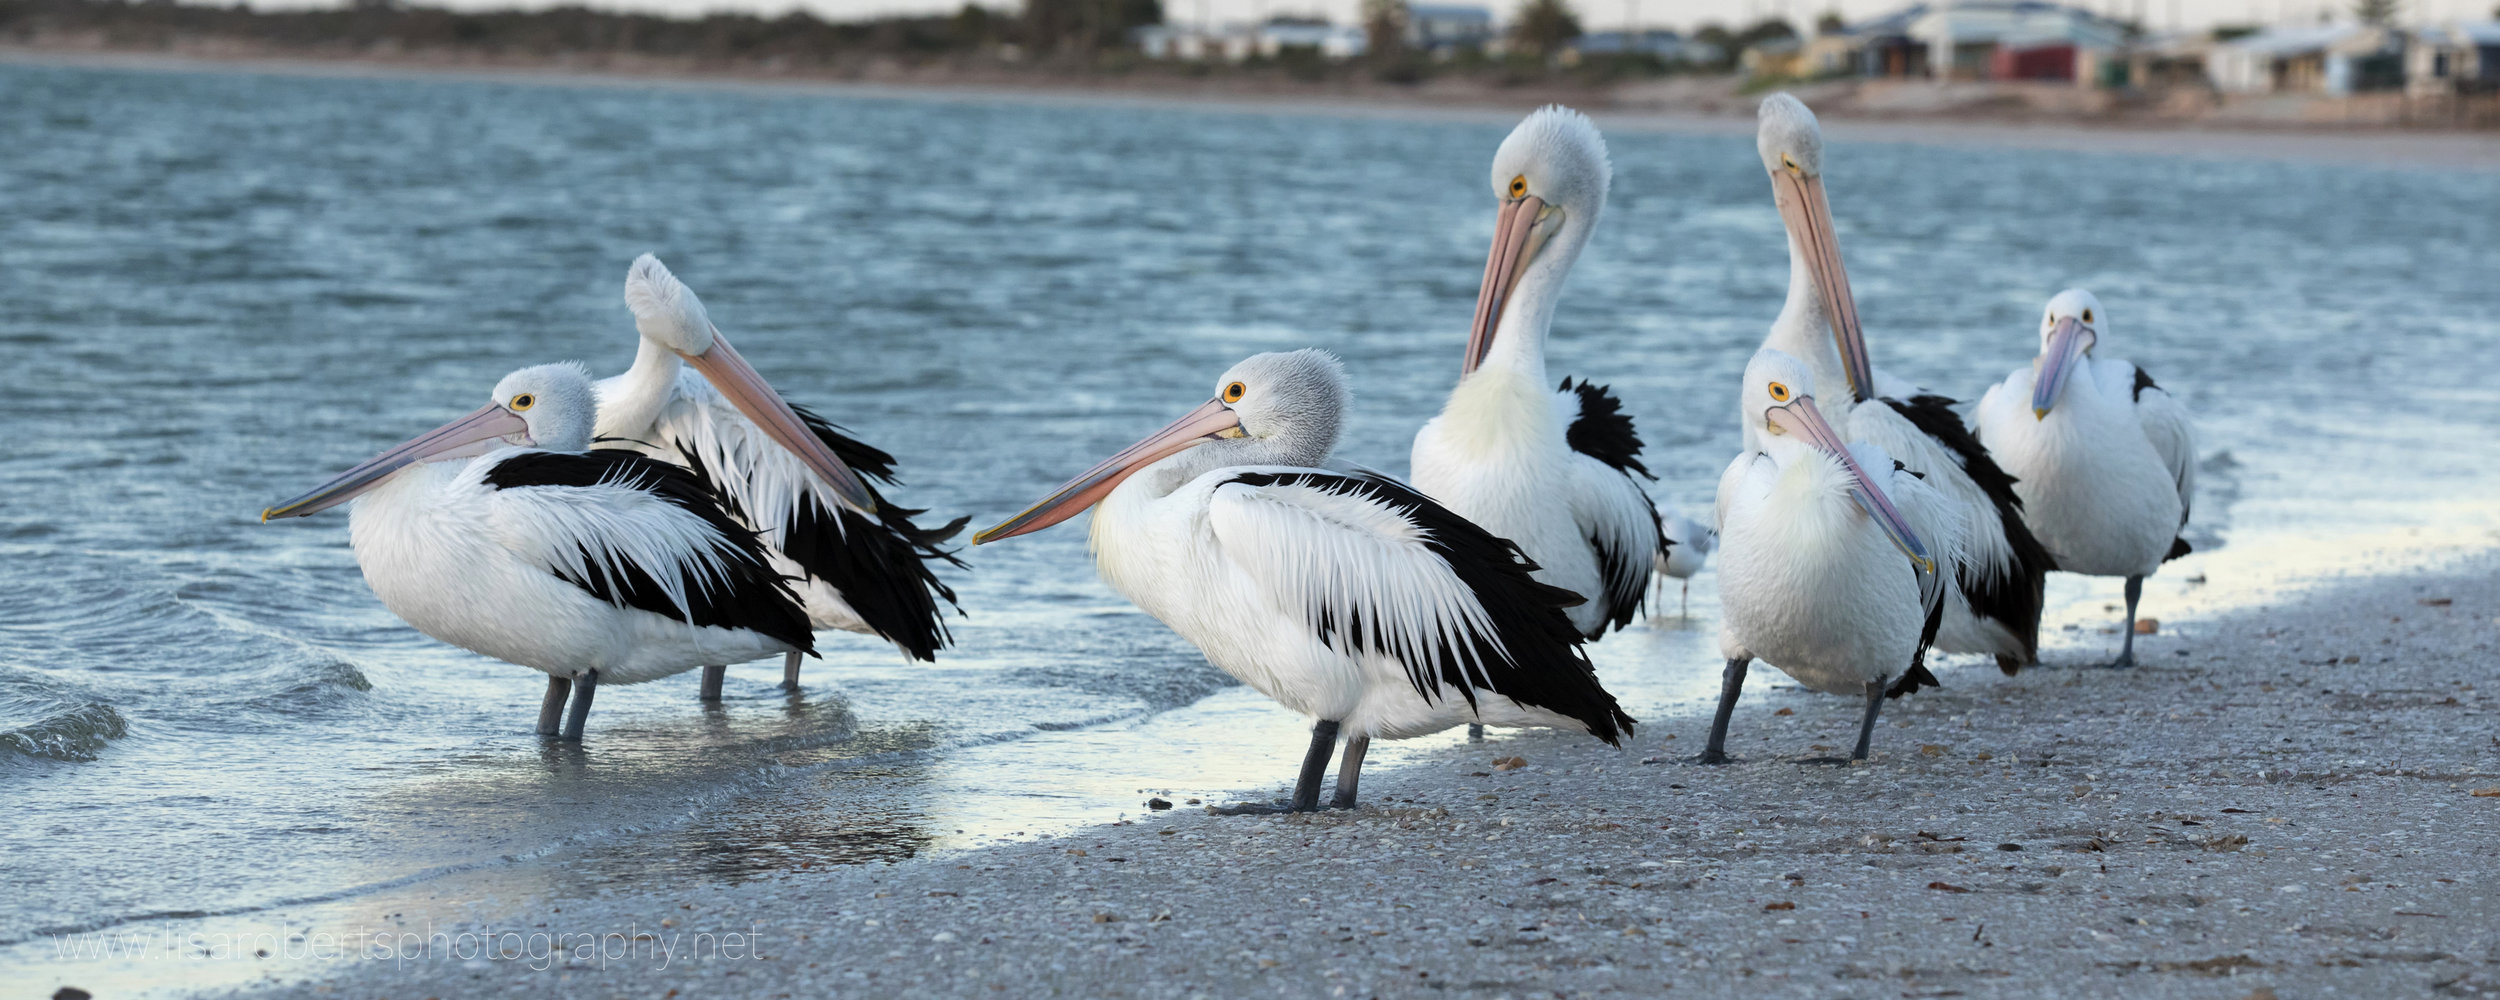  Pelicans, Smoky Bay, South Australia 